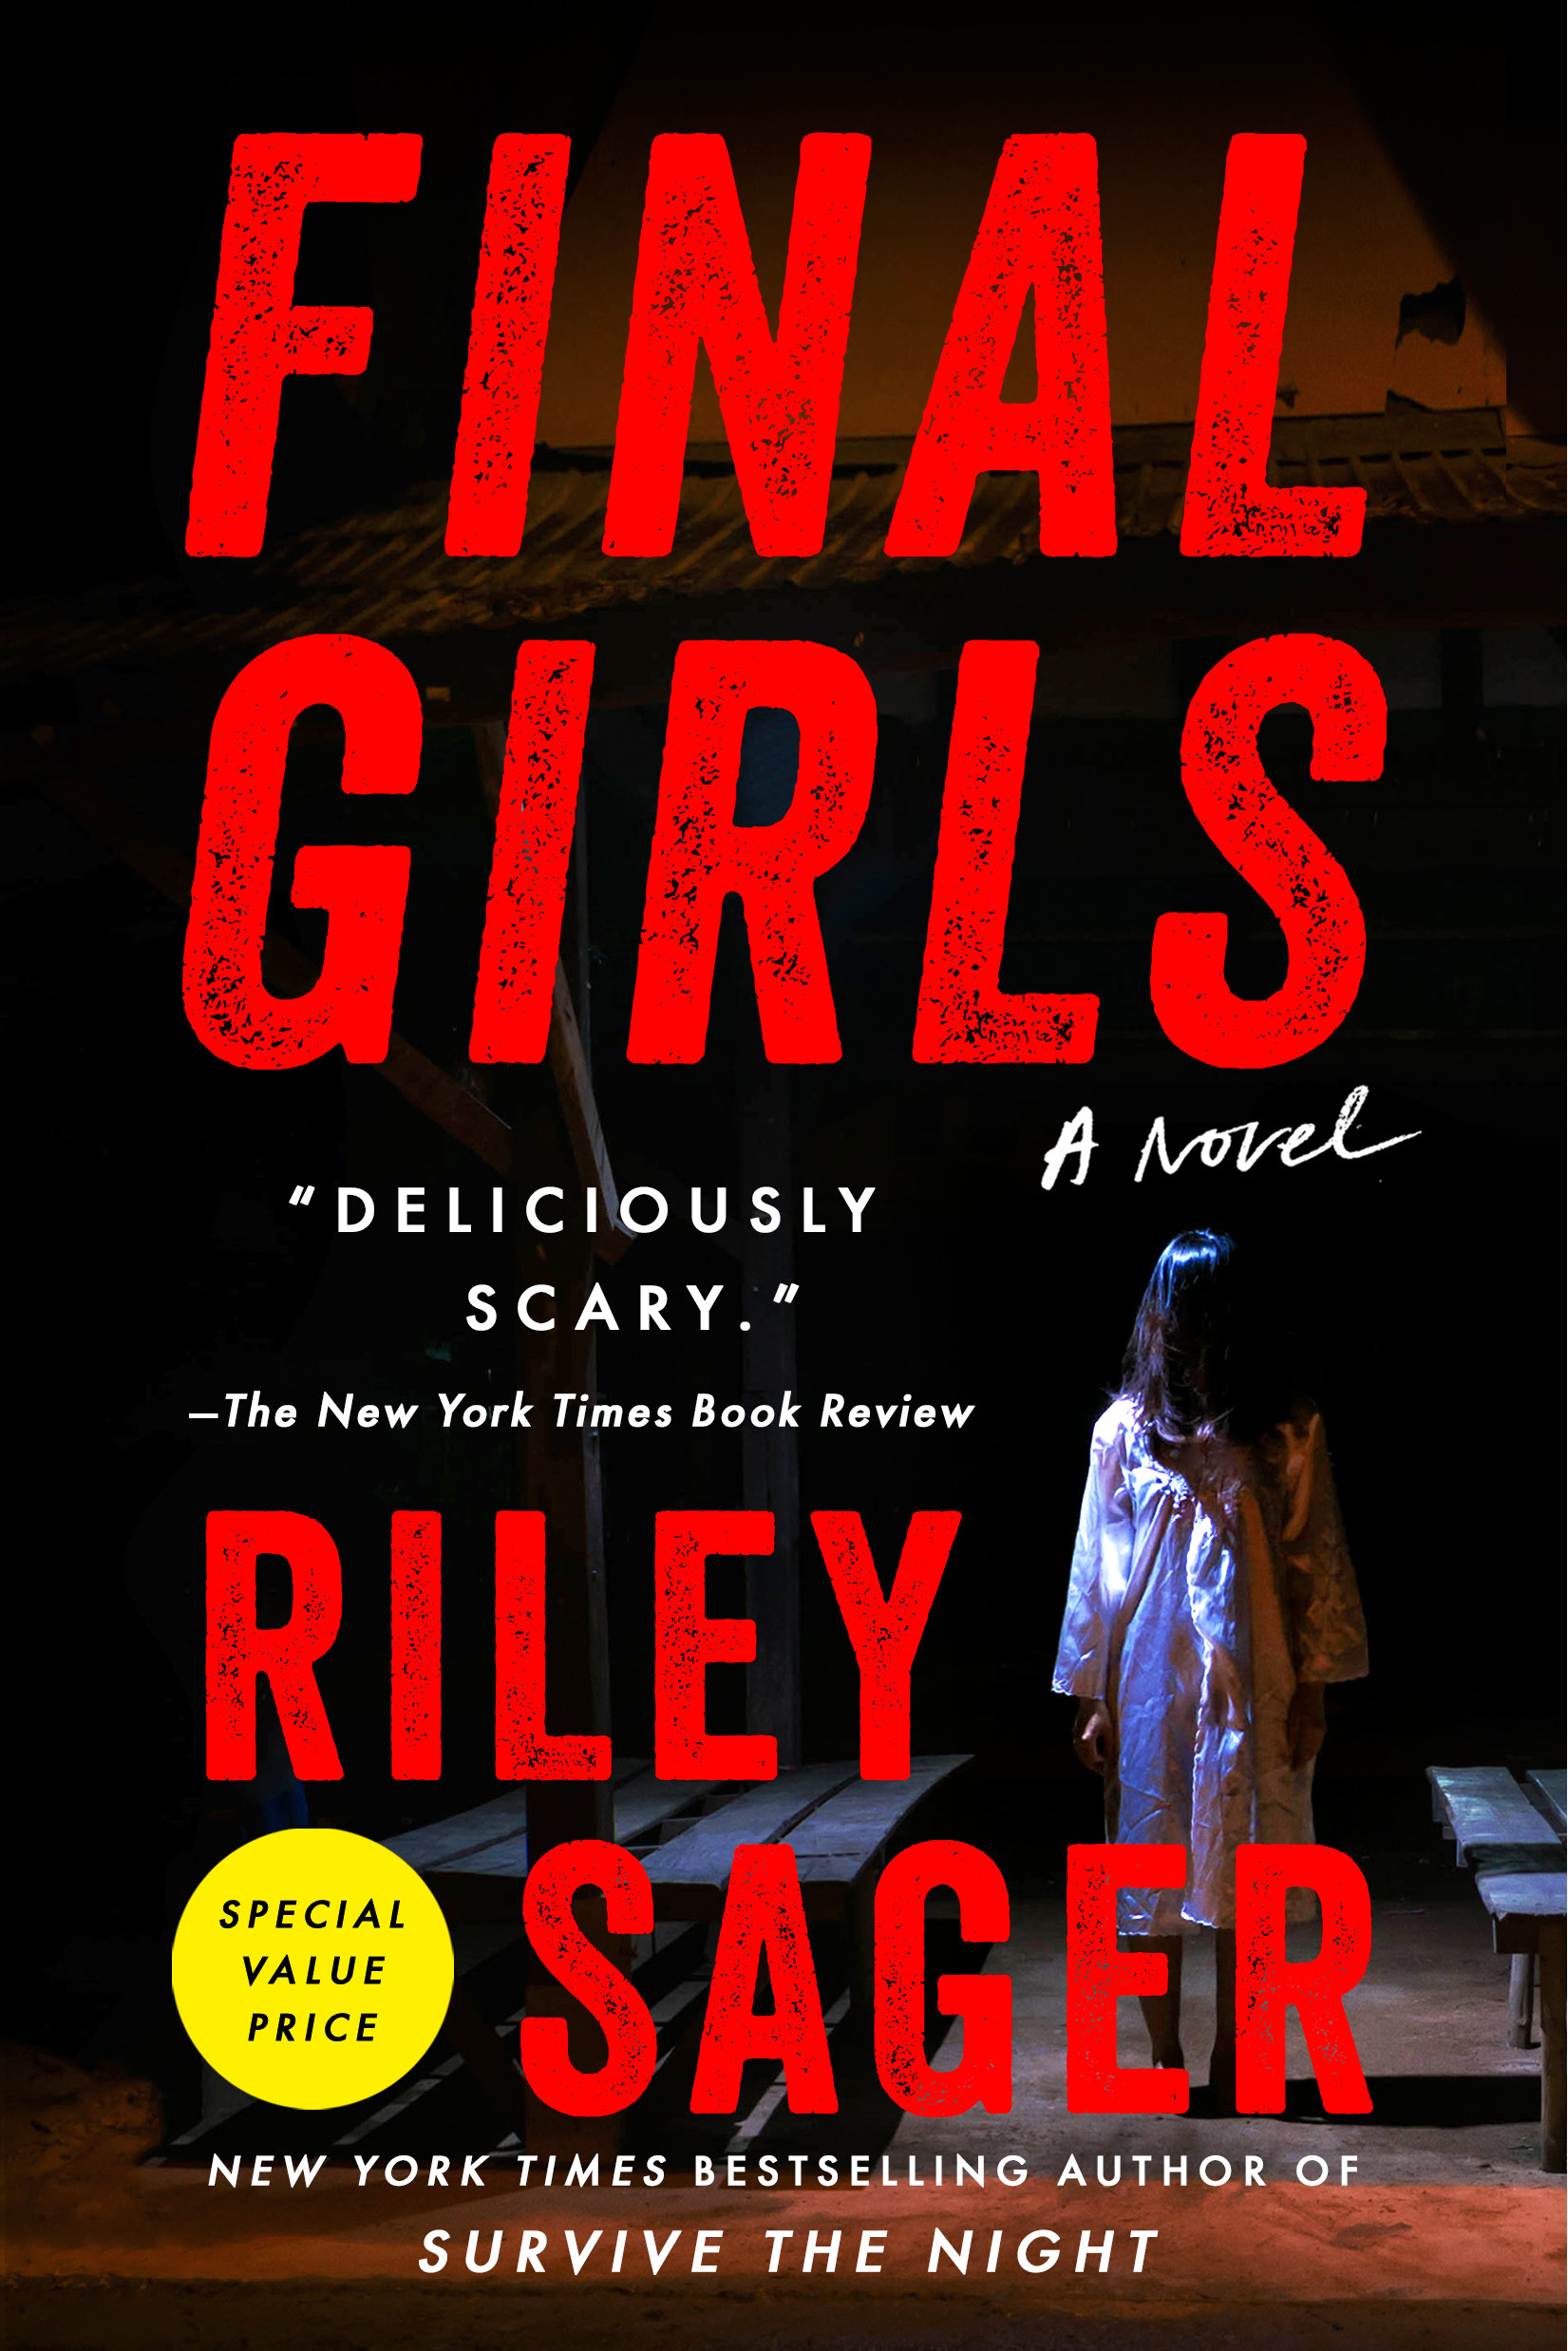 Final Girls : A Novel | Sager, Riley